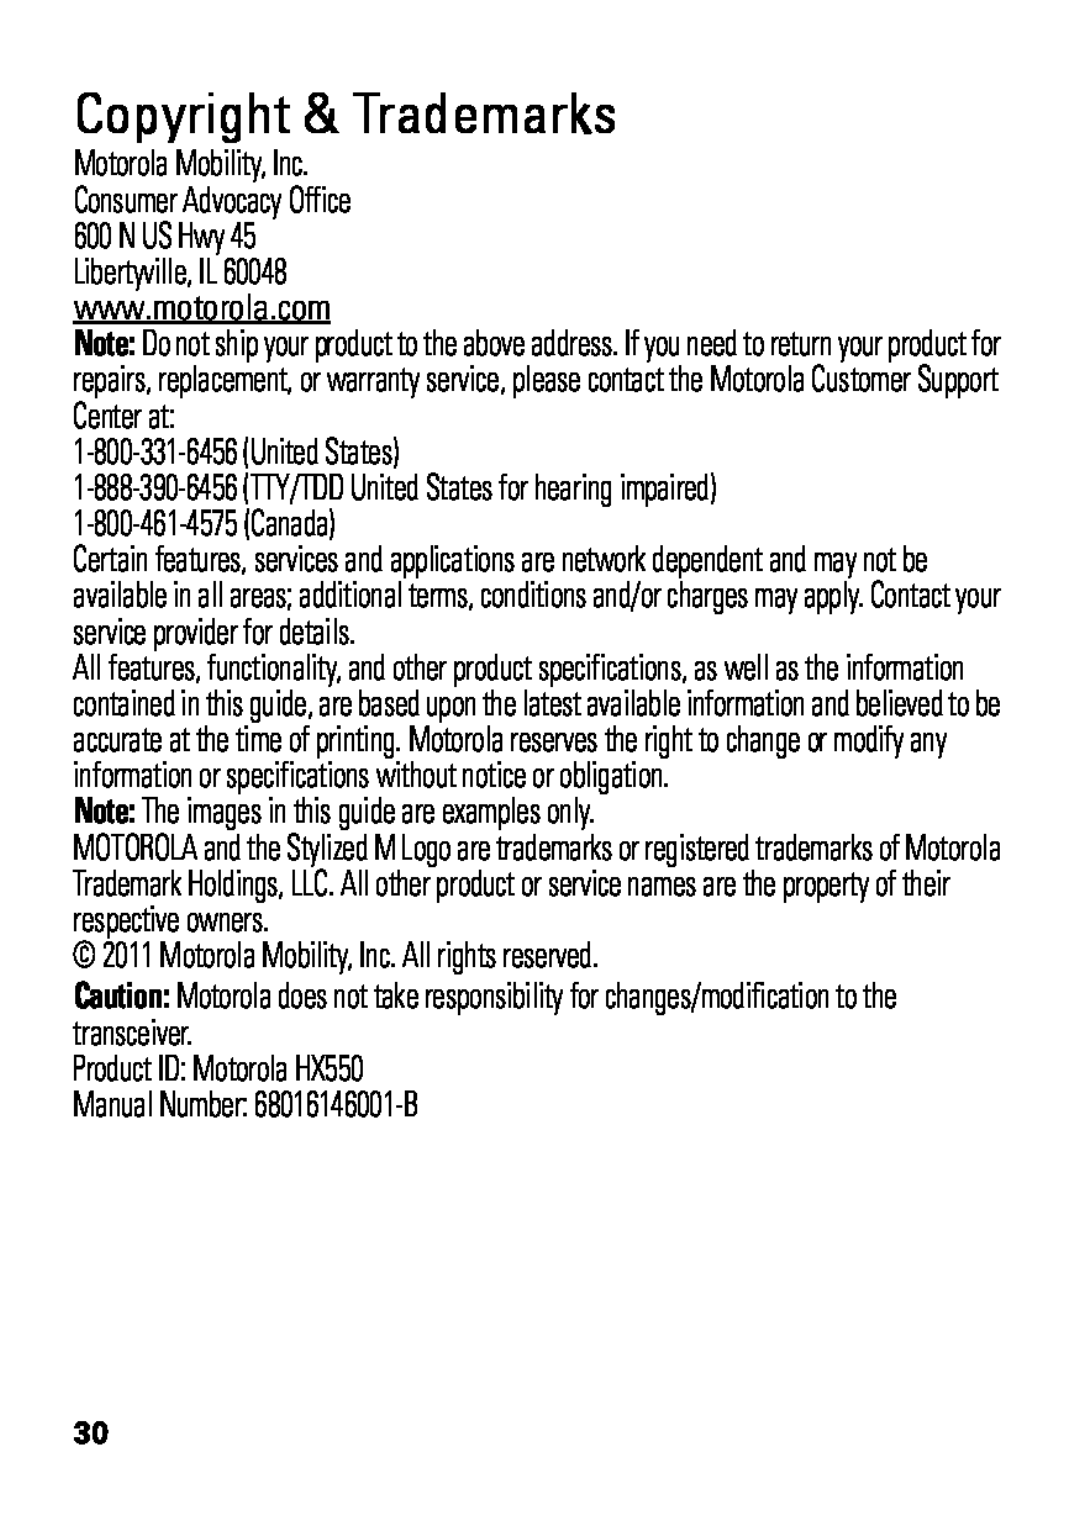 Motorola manual Copyright & Trademarks, 1-800-331-6456United States, 1-800-461-4575Canada, Product ID: Motorola HX550 